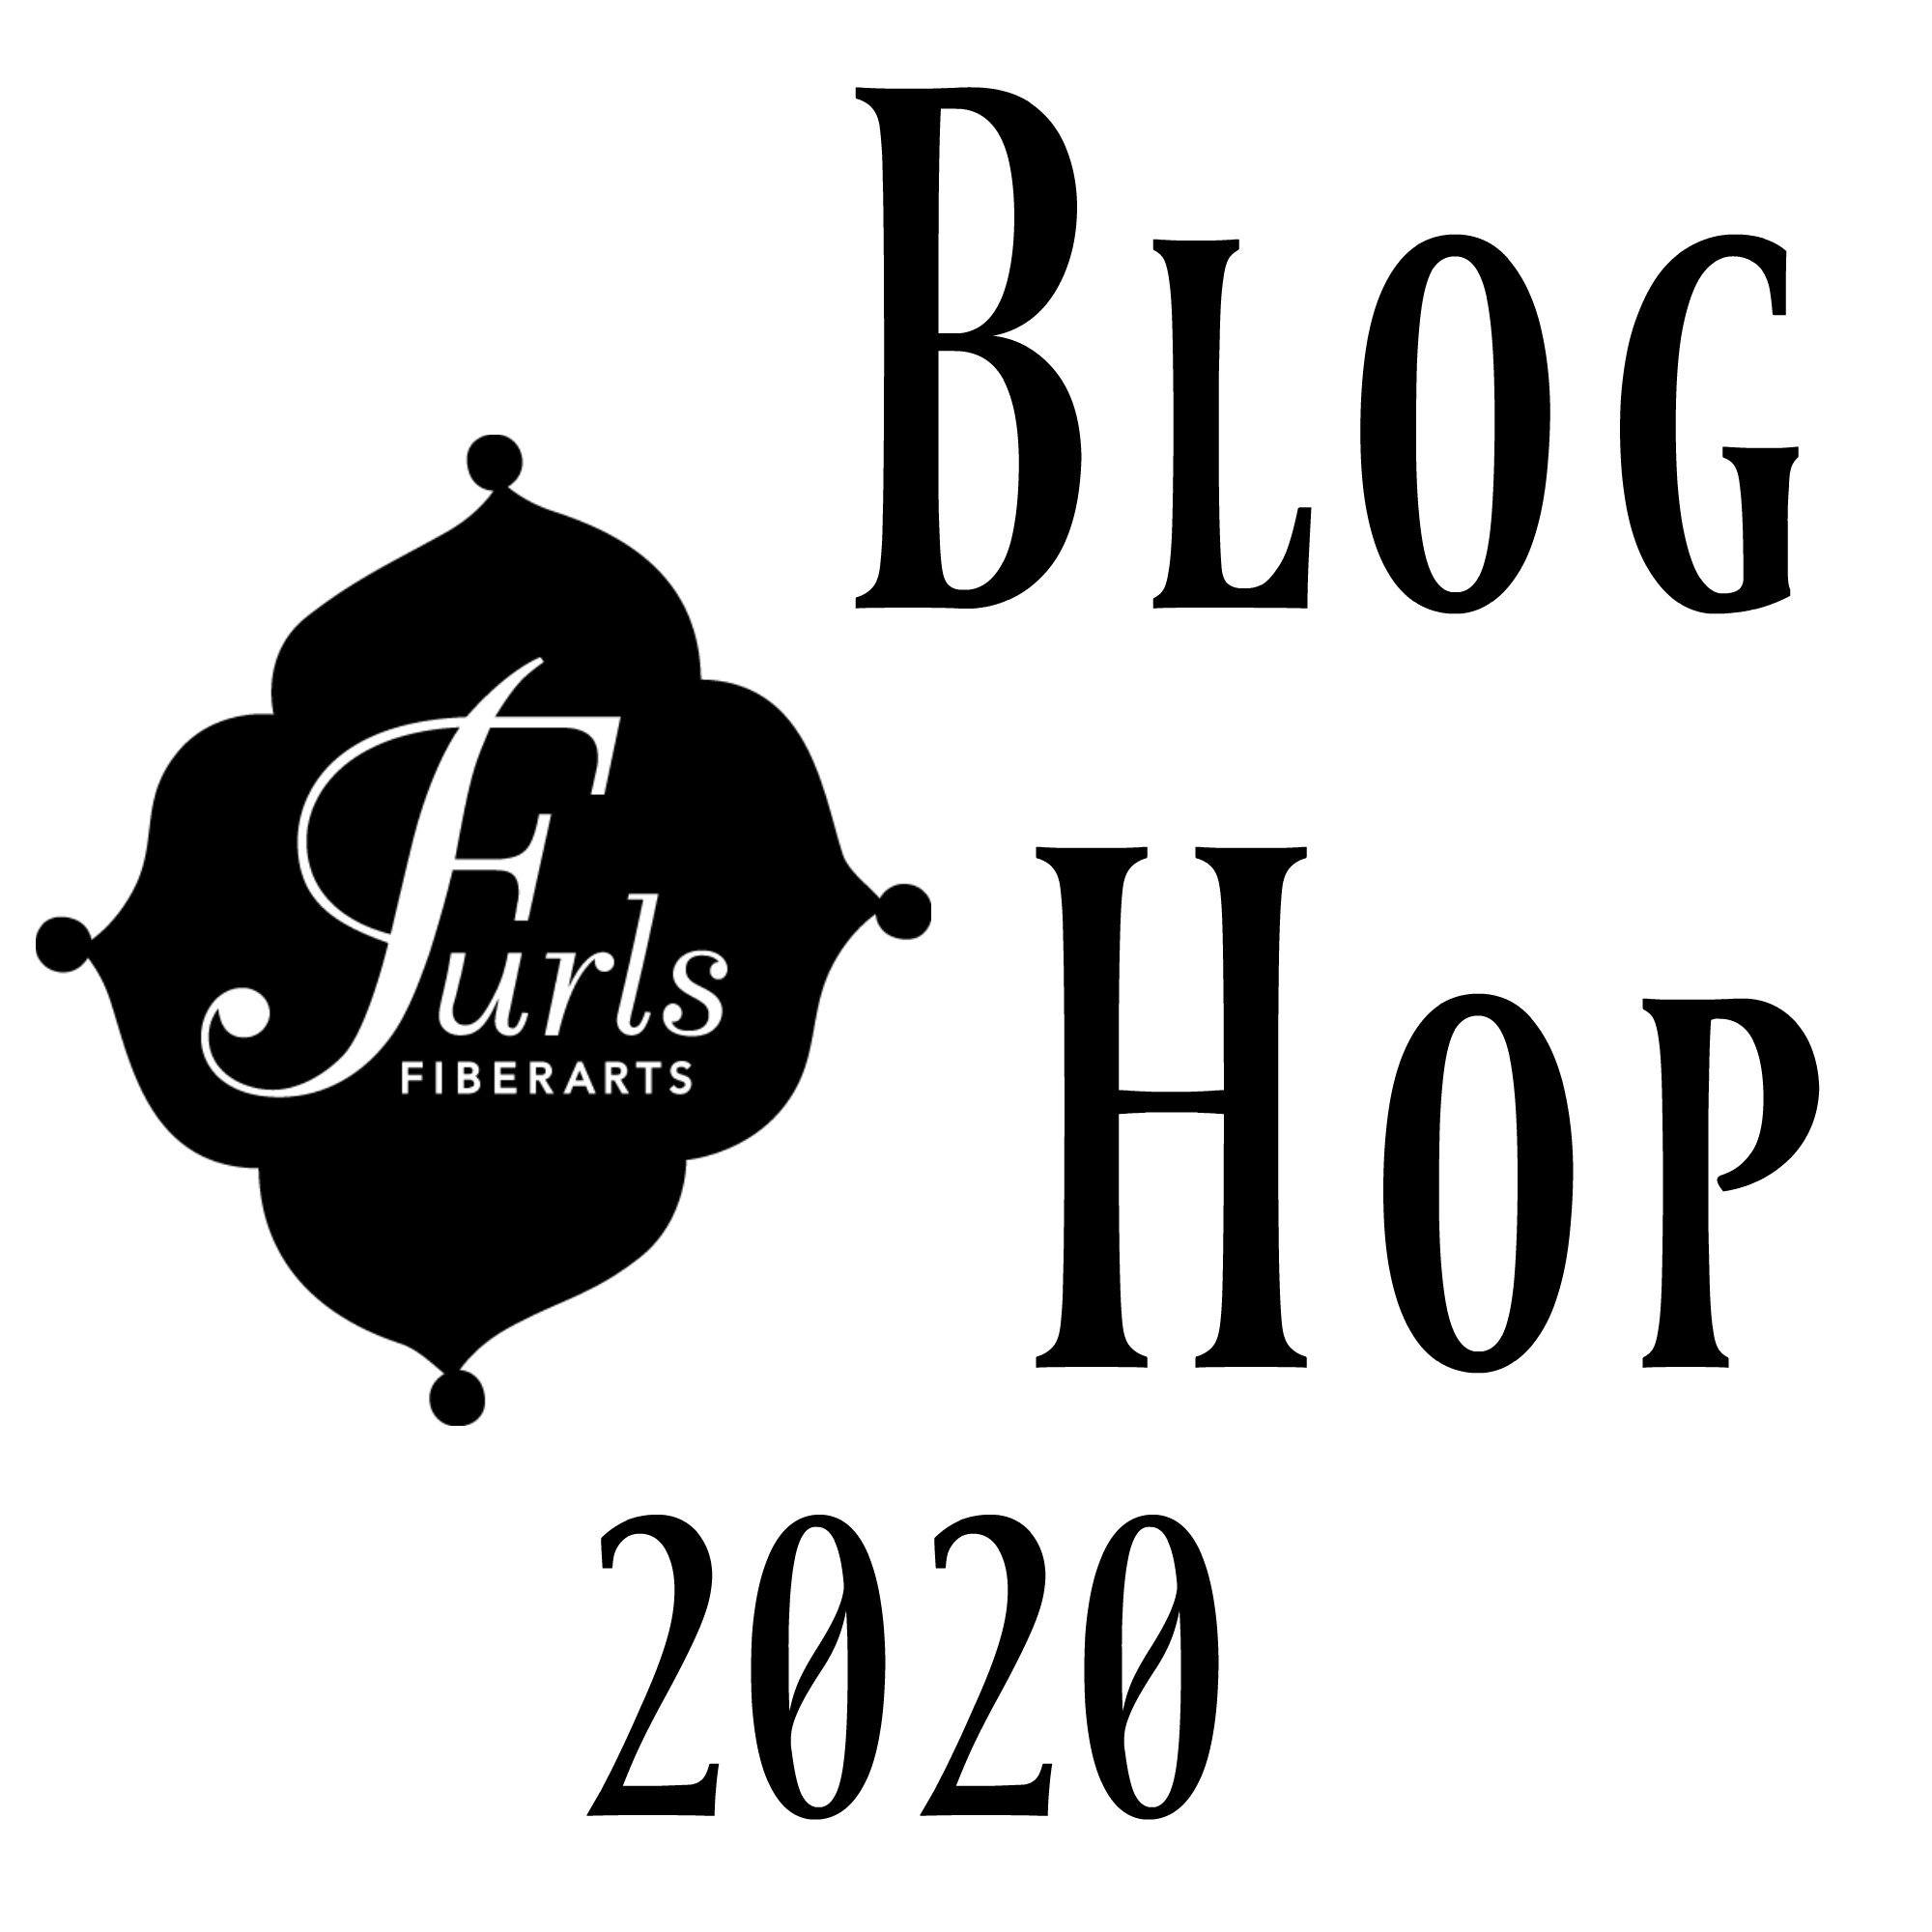 Furls Blog Hop 2020 - 52 FREE Crochet and Knit Patterns